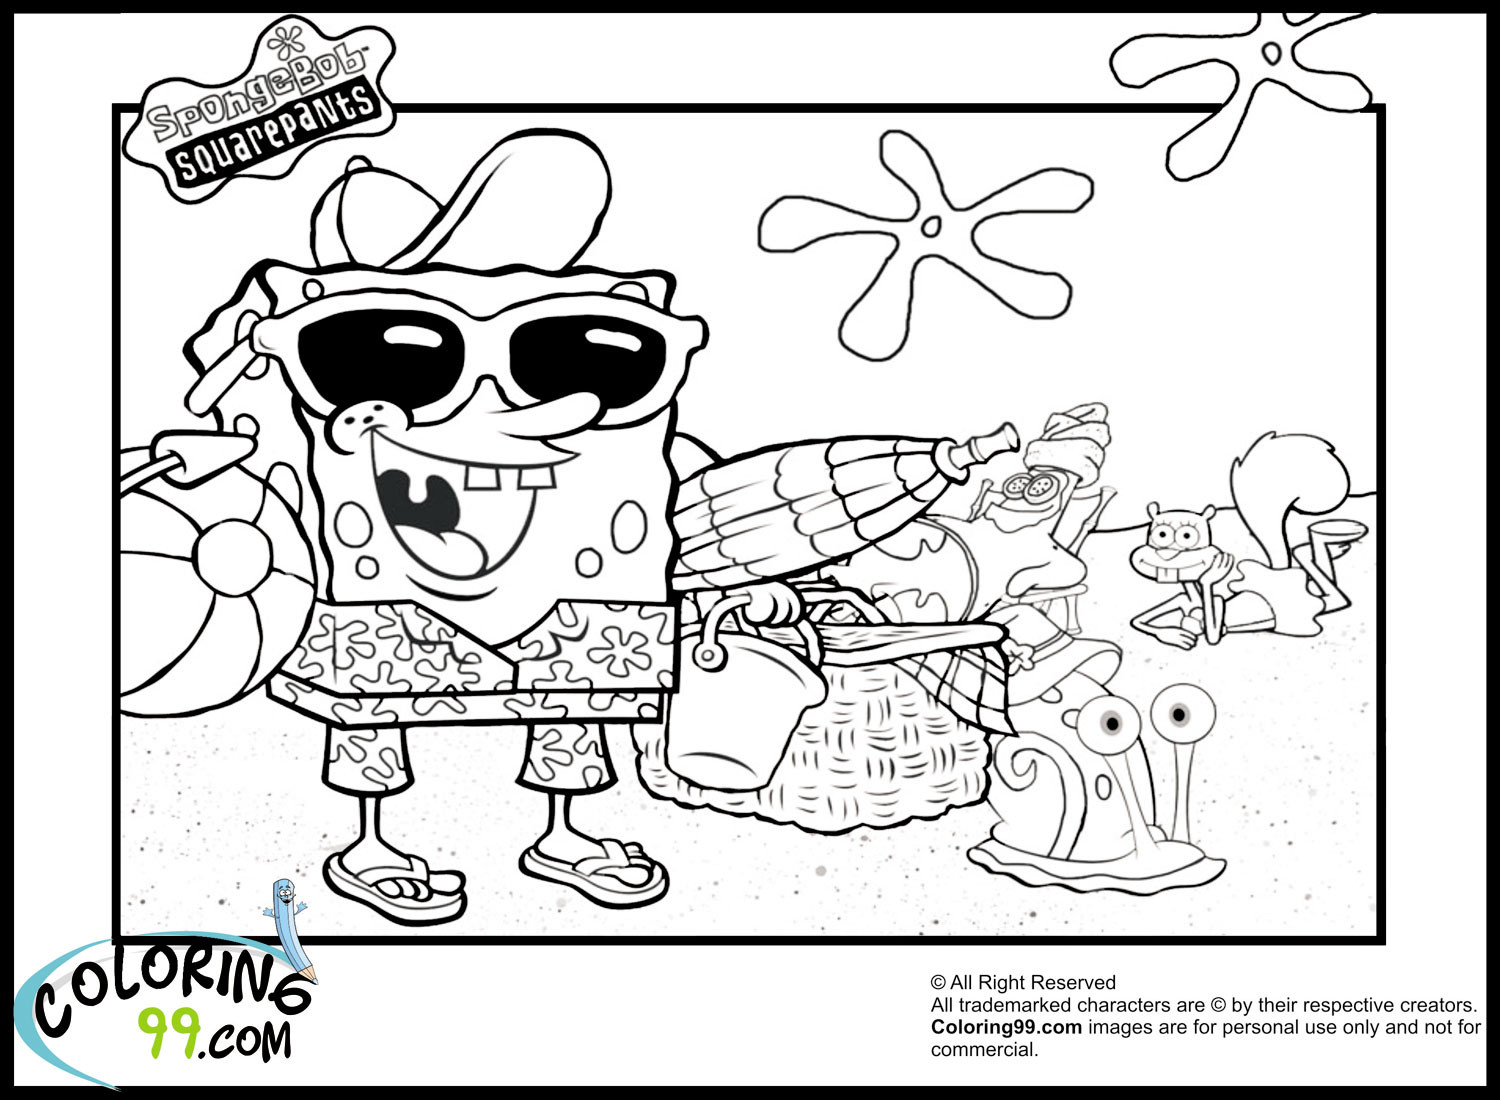 Best ideas about Spongebvob Coloring Pages For Girls
. Save or Pin Spongebob Coloring Pages For Girls Now.